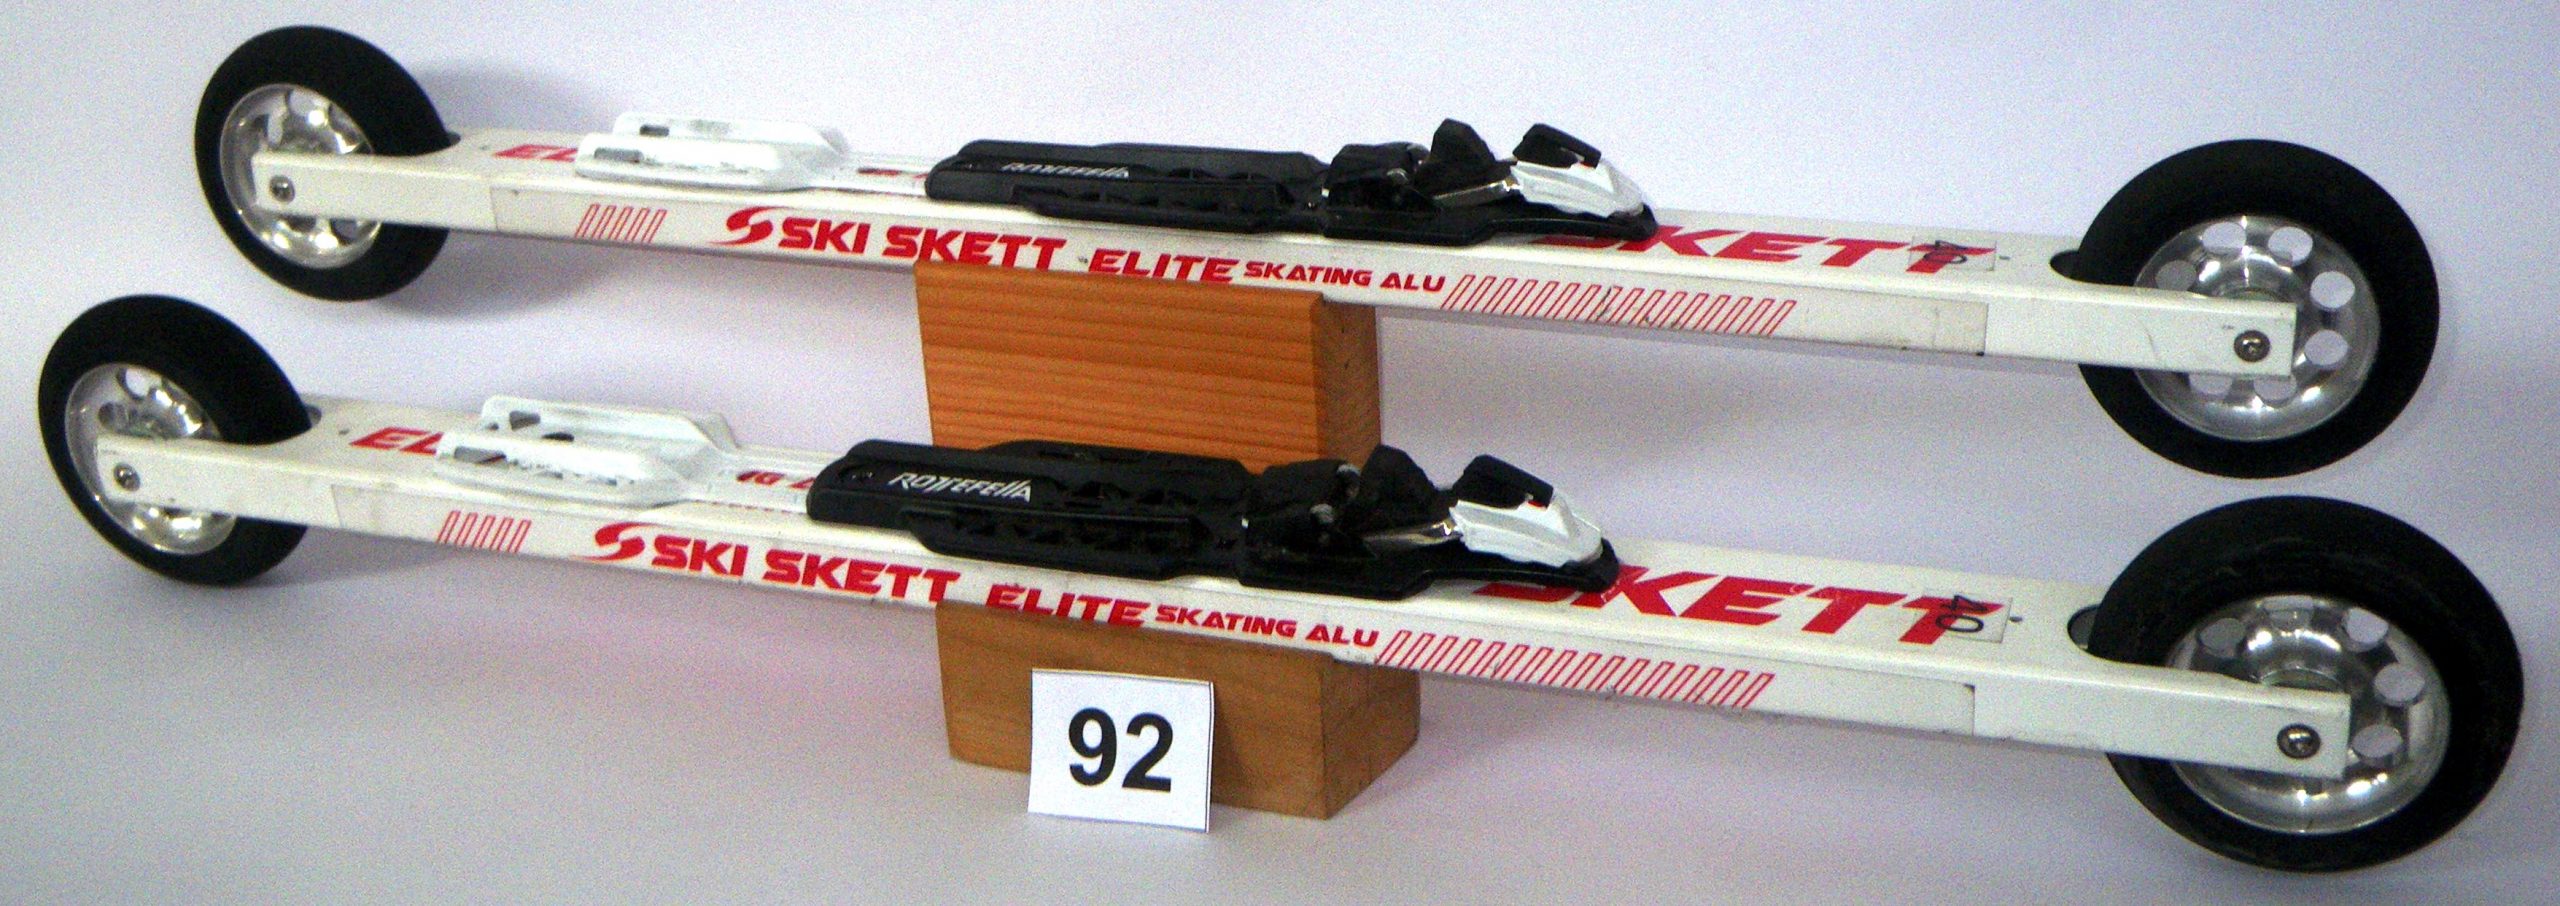 Roller Ski e Skiroll Skiskett prodotto Elite Skate Alu 92